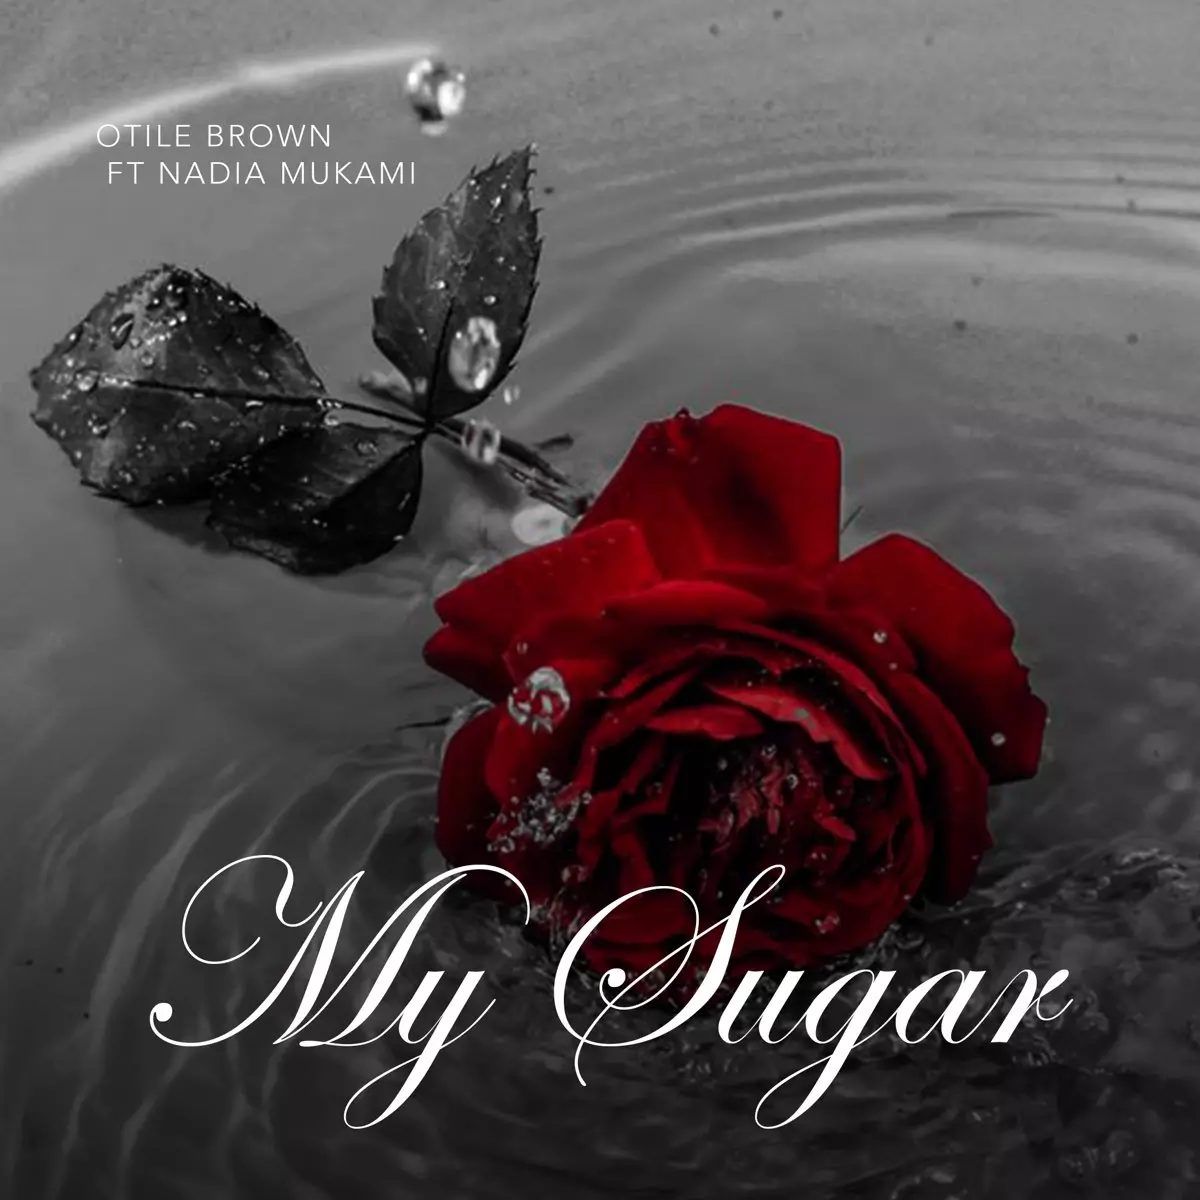 My Sugar (feat. Nadia Mukami) - Single by Otile Brown on Apple Music